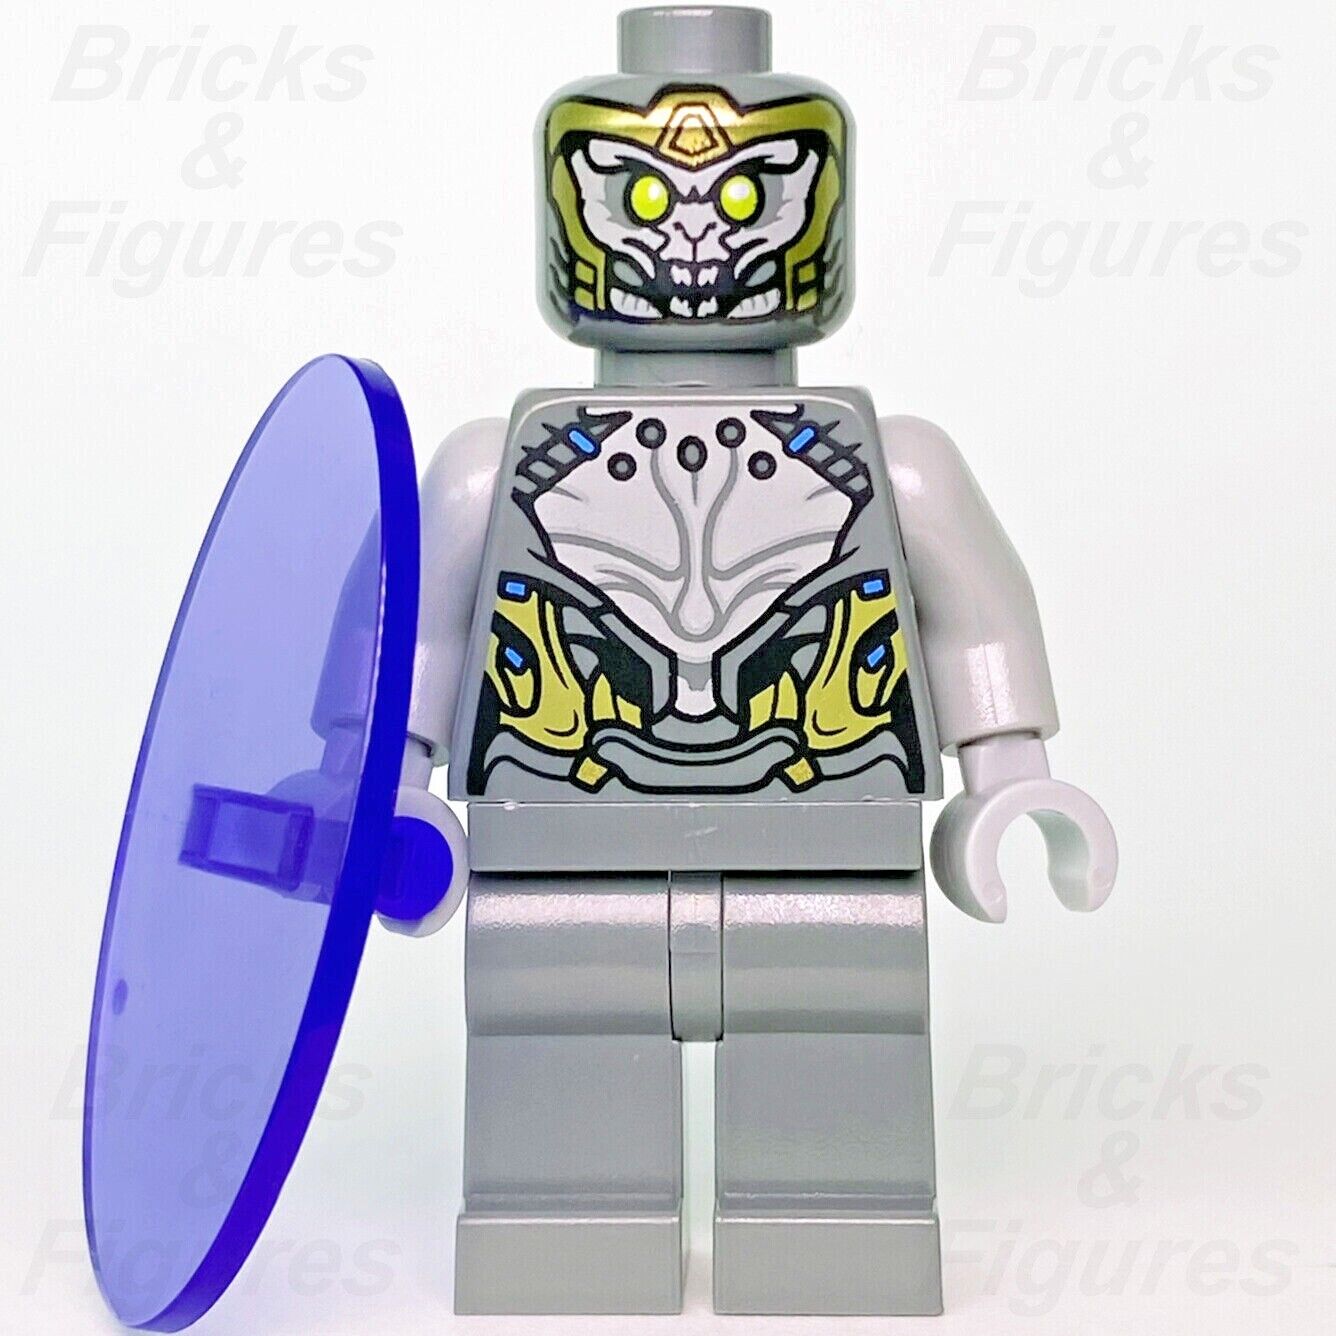 Marvel Super Heroes LEGO Chitauri Avengers Endgame Minifigure 40525 sh730 New - Bricks & Figures